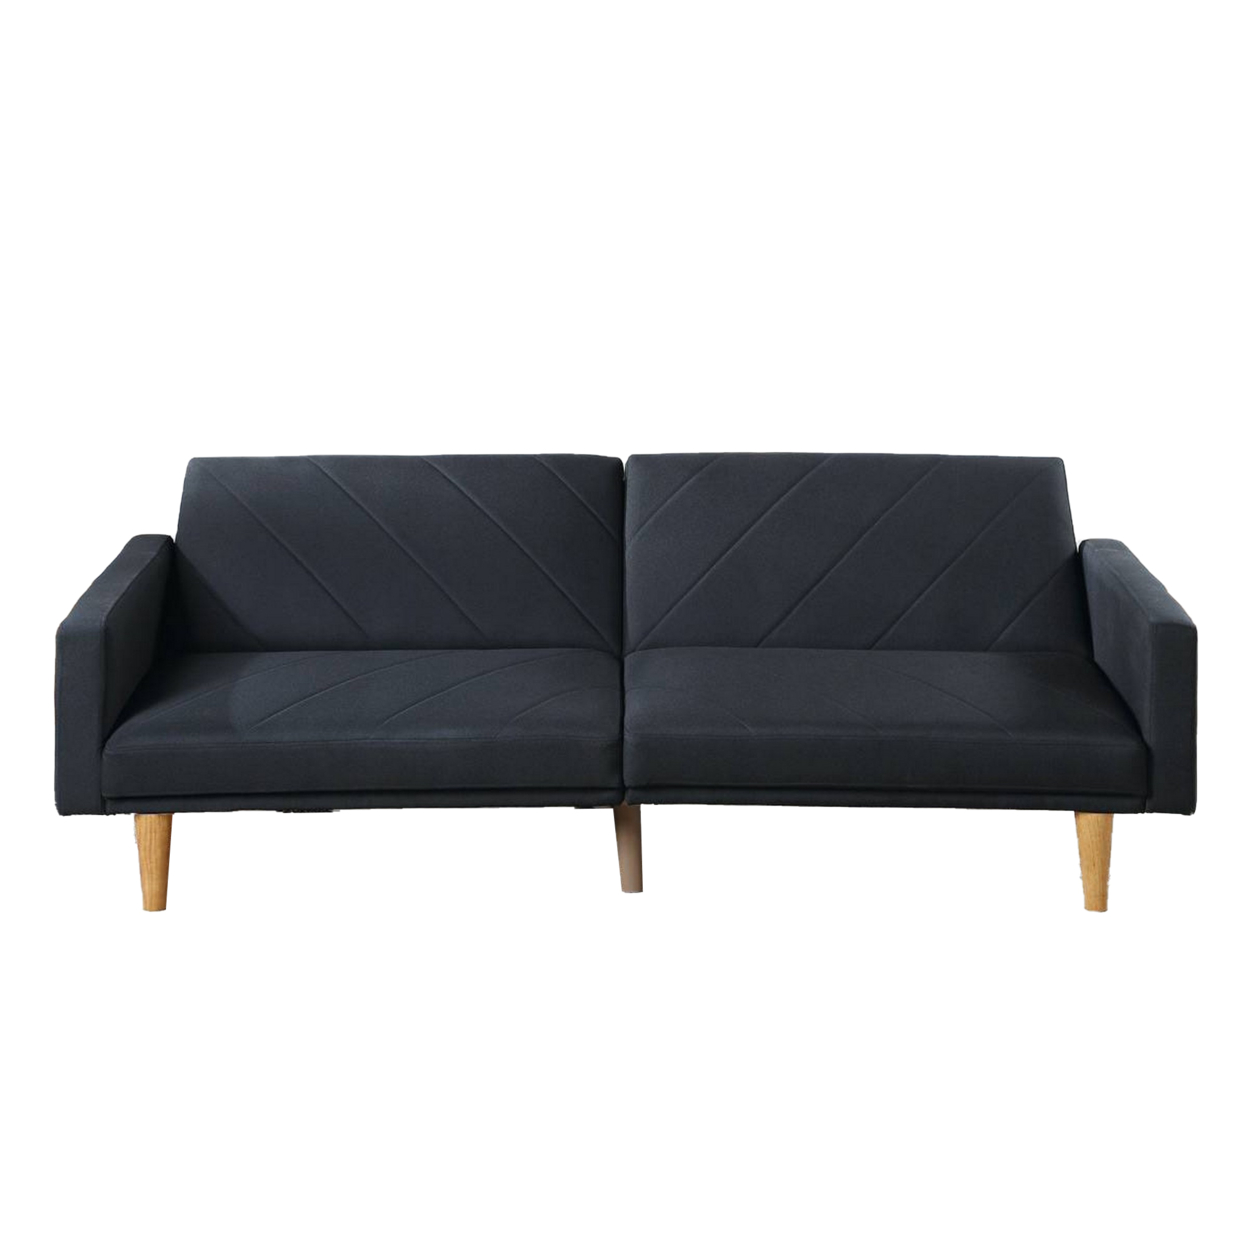 Fabric Adjustable Sofa With Chevron Pattern And Splayed Legs, Black- Saltoro Sherpi